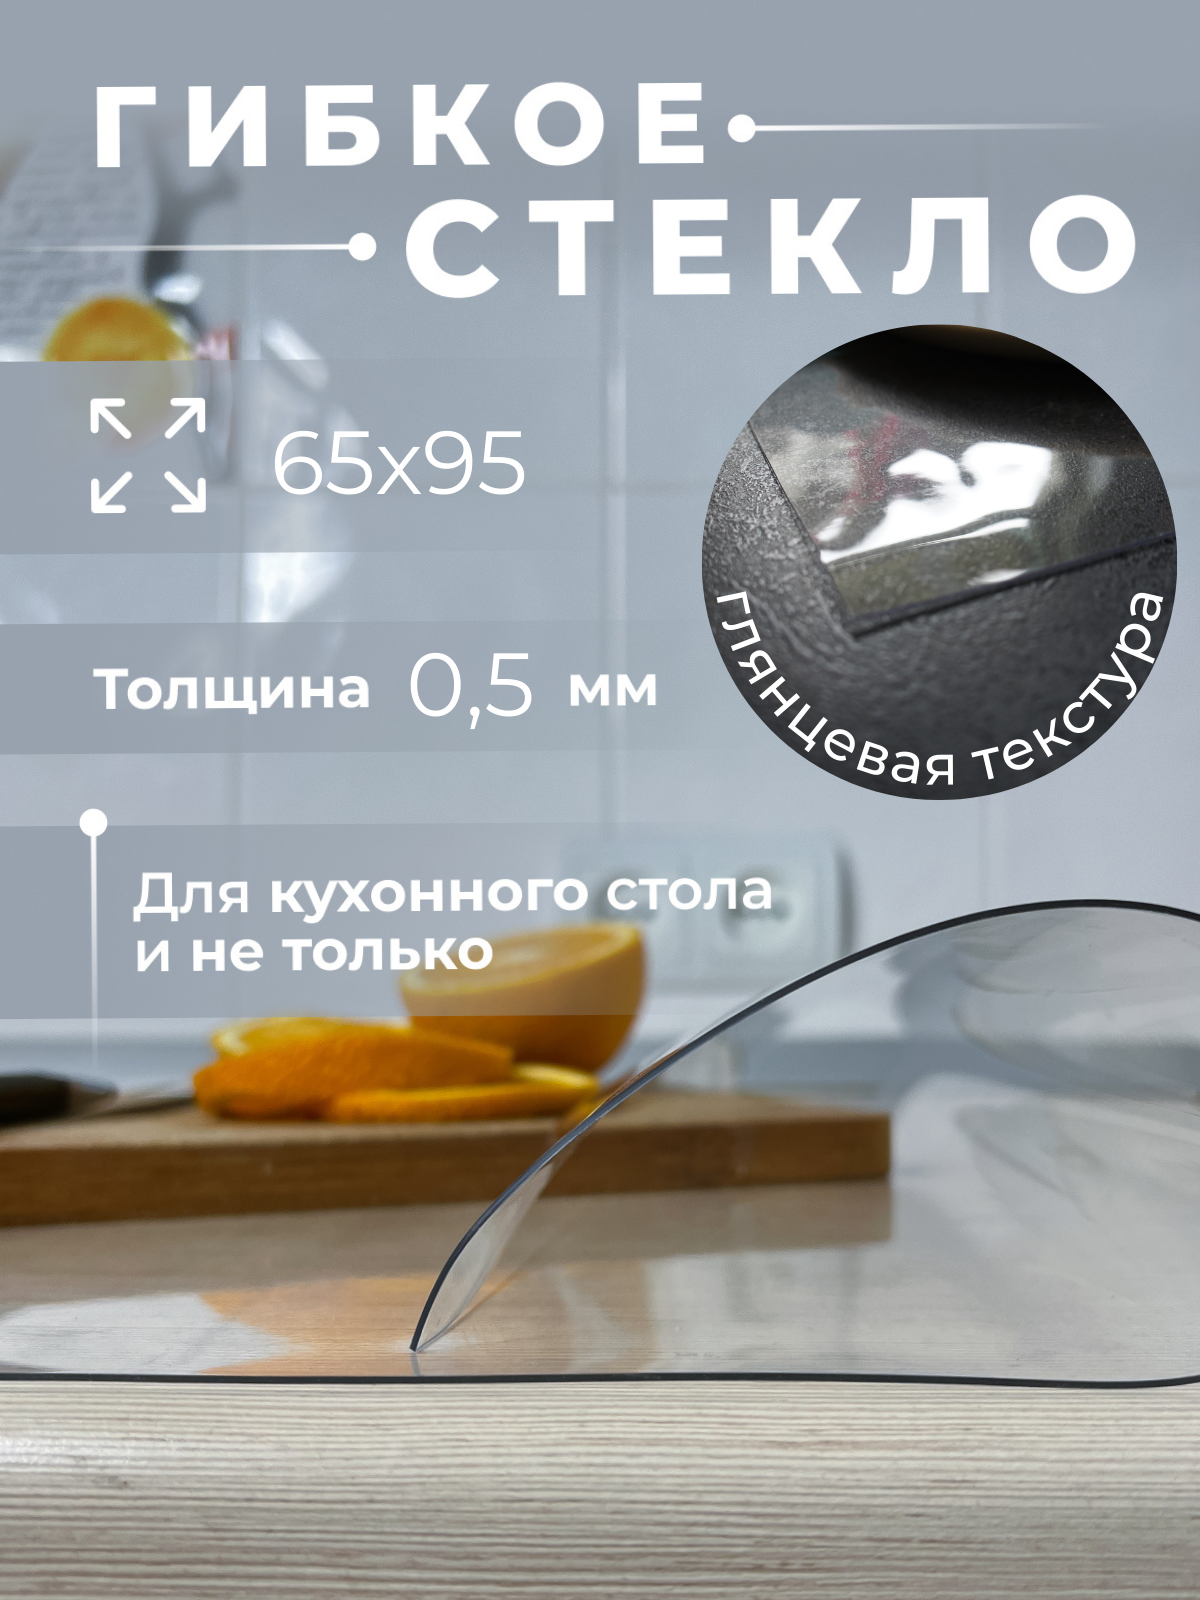 Гибкое стекло AEAhome для кухонного стола 65х95 толщина 0,5